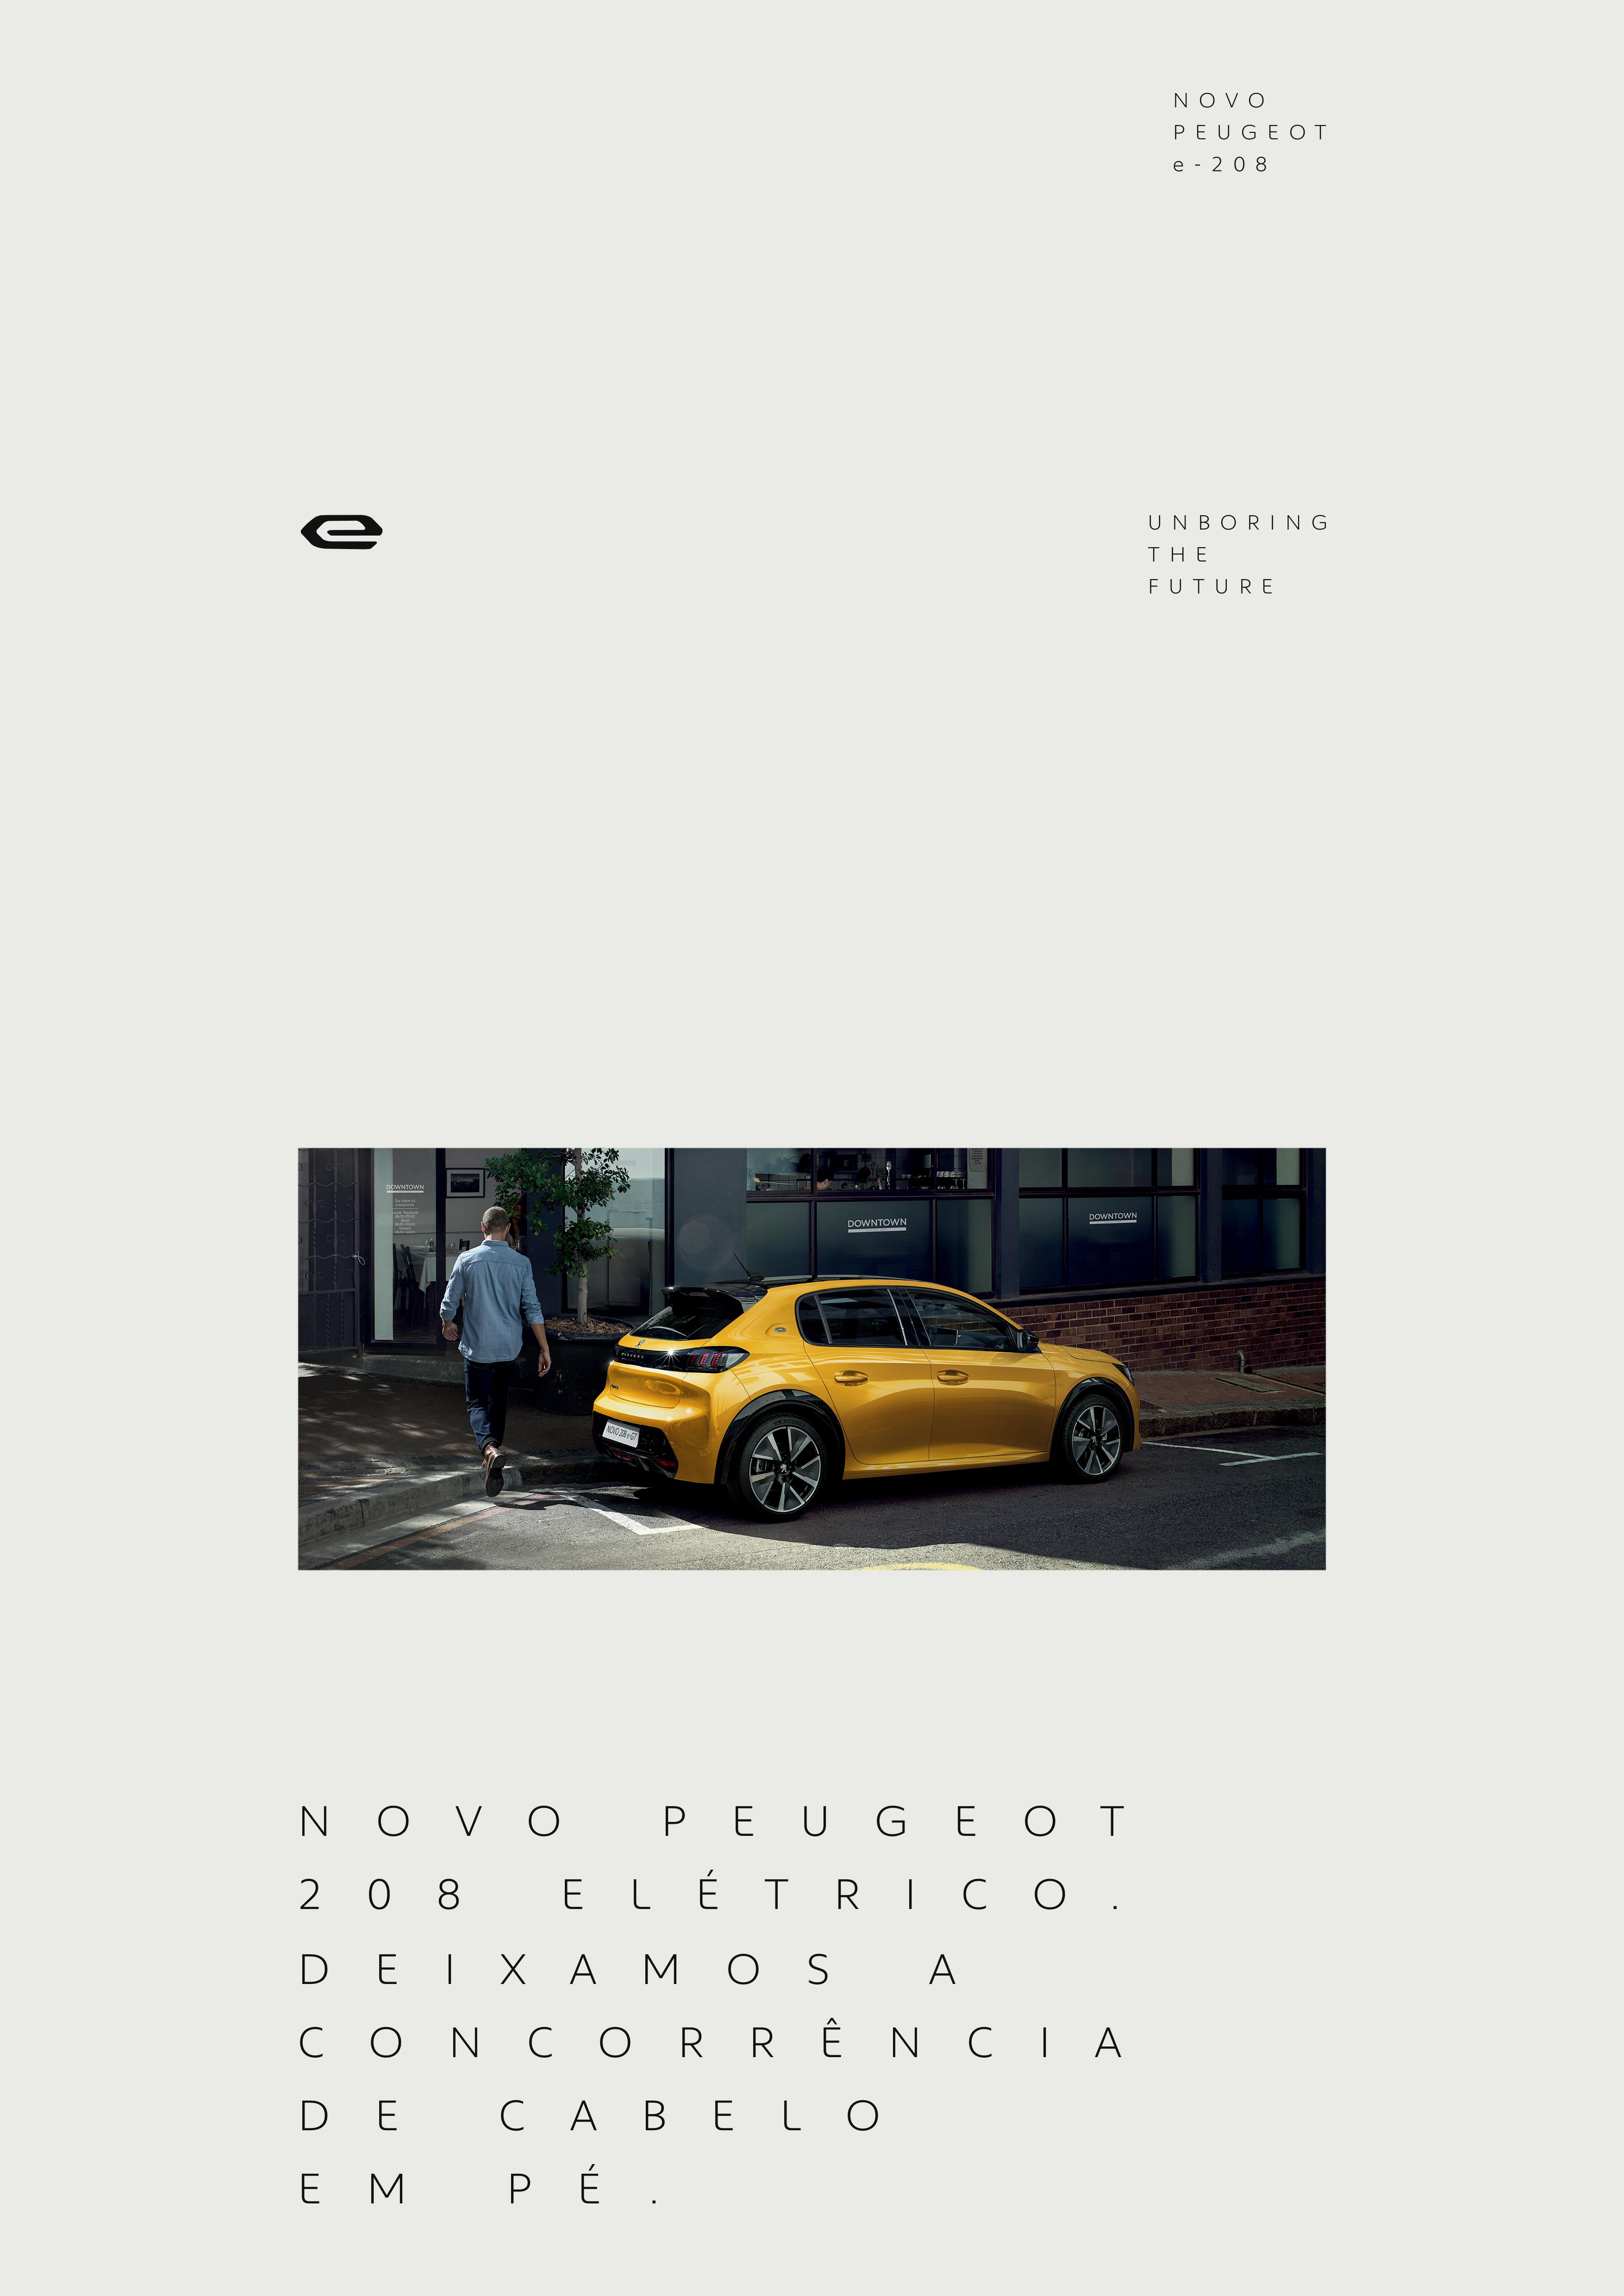 New Peugeot 8 Vitinho Chagas